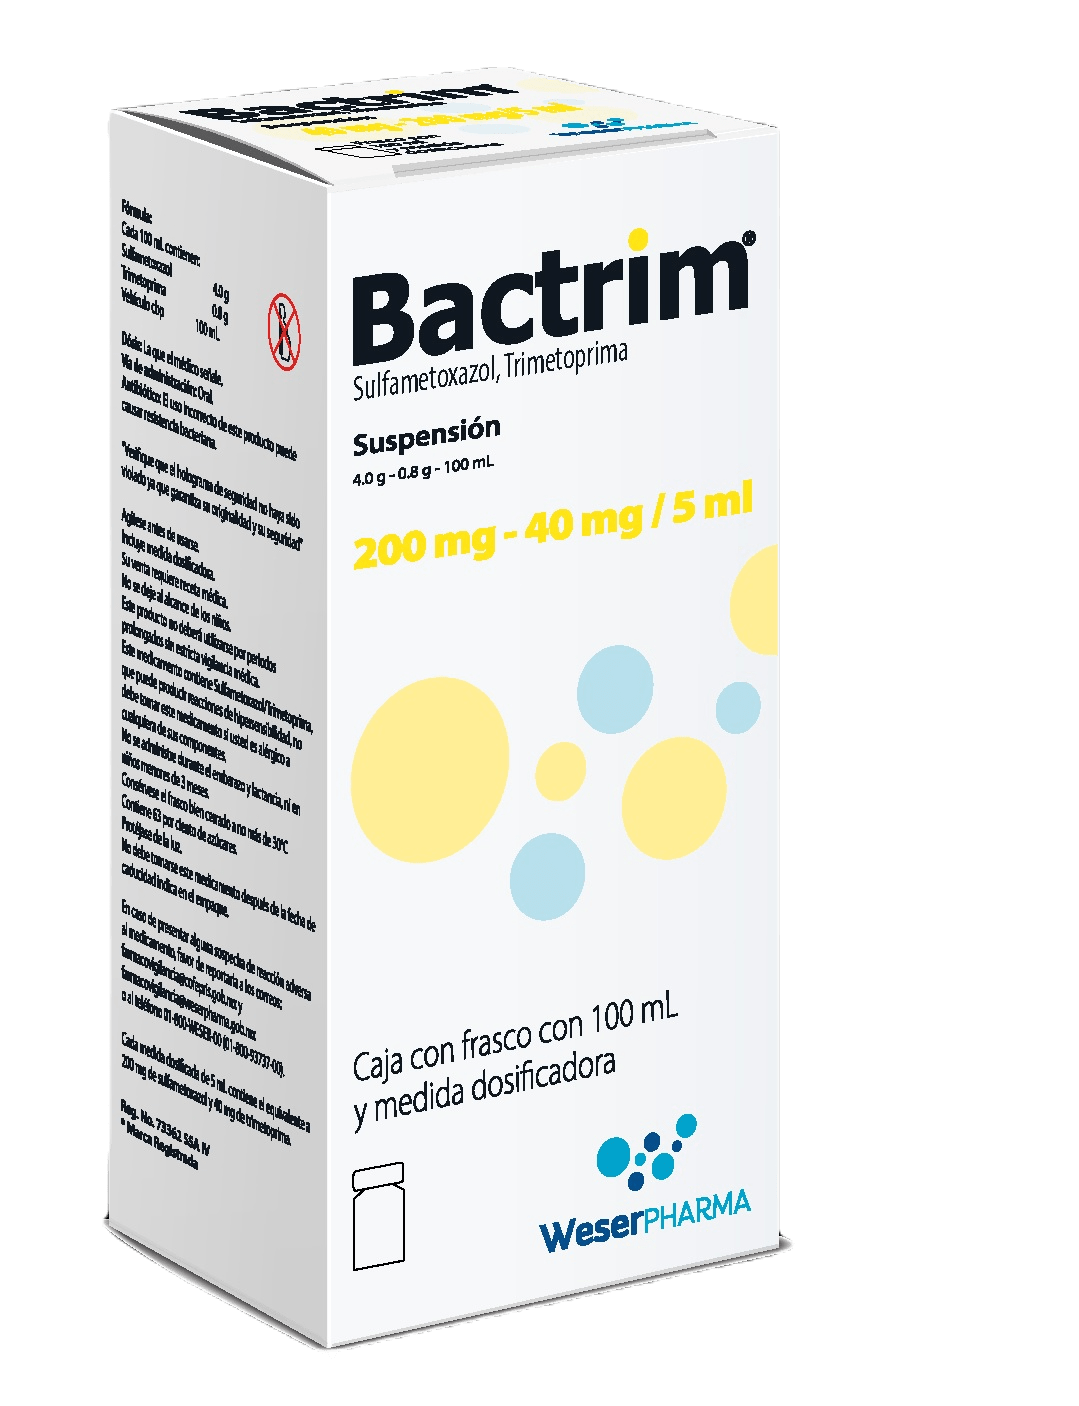 Bactrim Suspension 200 mg / 40 mg / 5 mL Frasco con 100 mL - Farmacias .